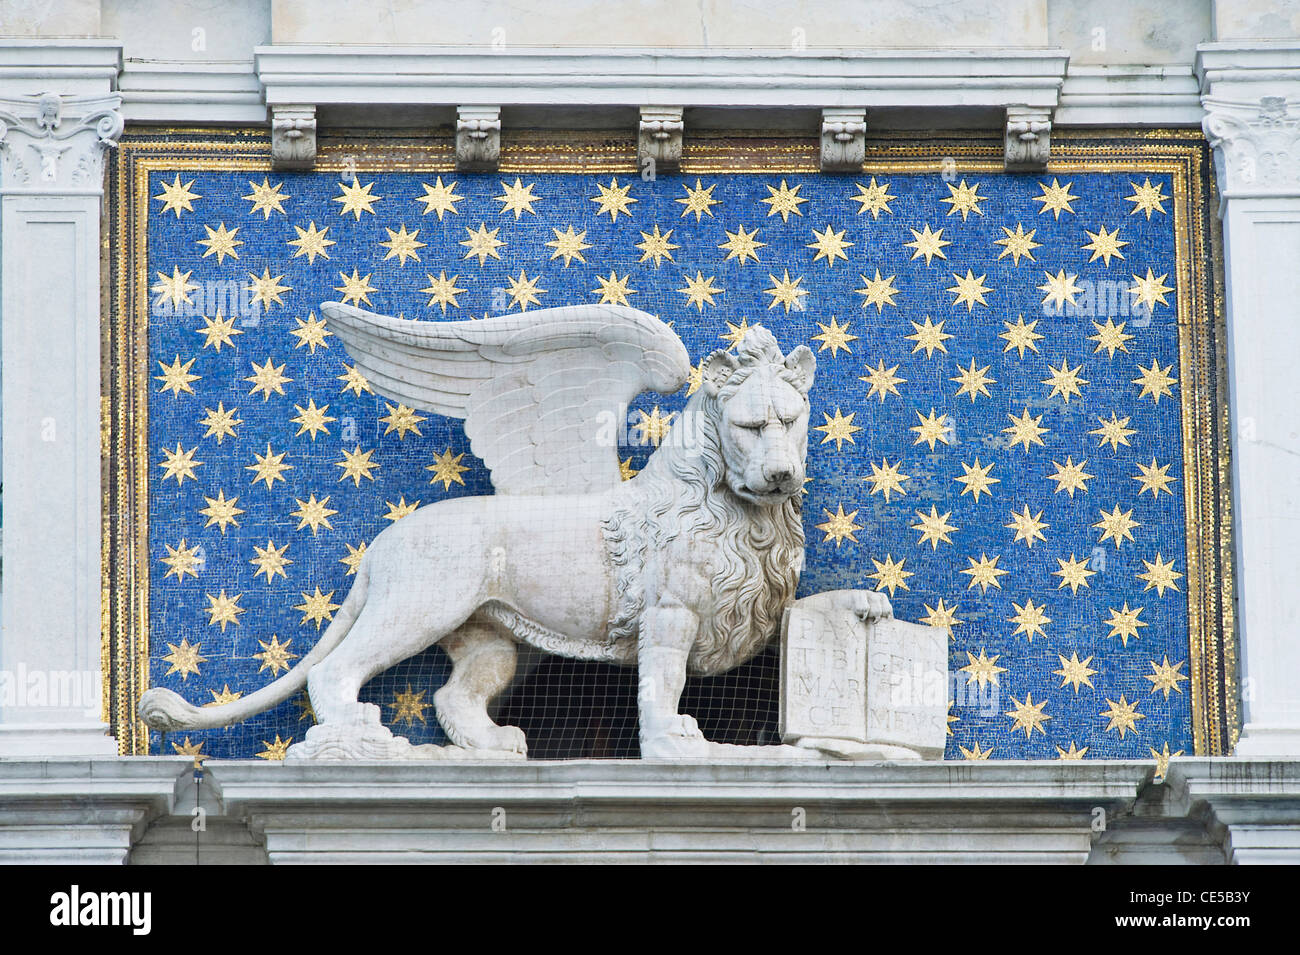 Italy, Venice, Winged Lion of St. Mark's on St. Mark's Clocktower - symbol of St. Mark, patron saint of Venice Stock Photo